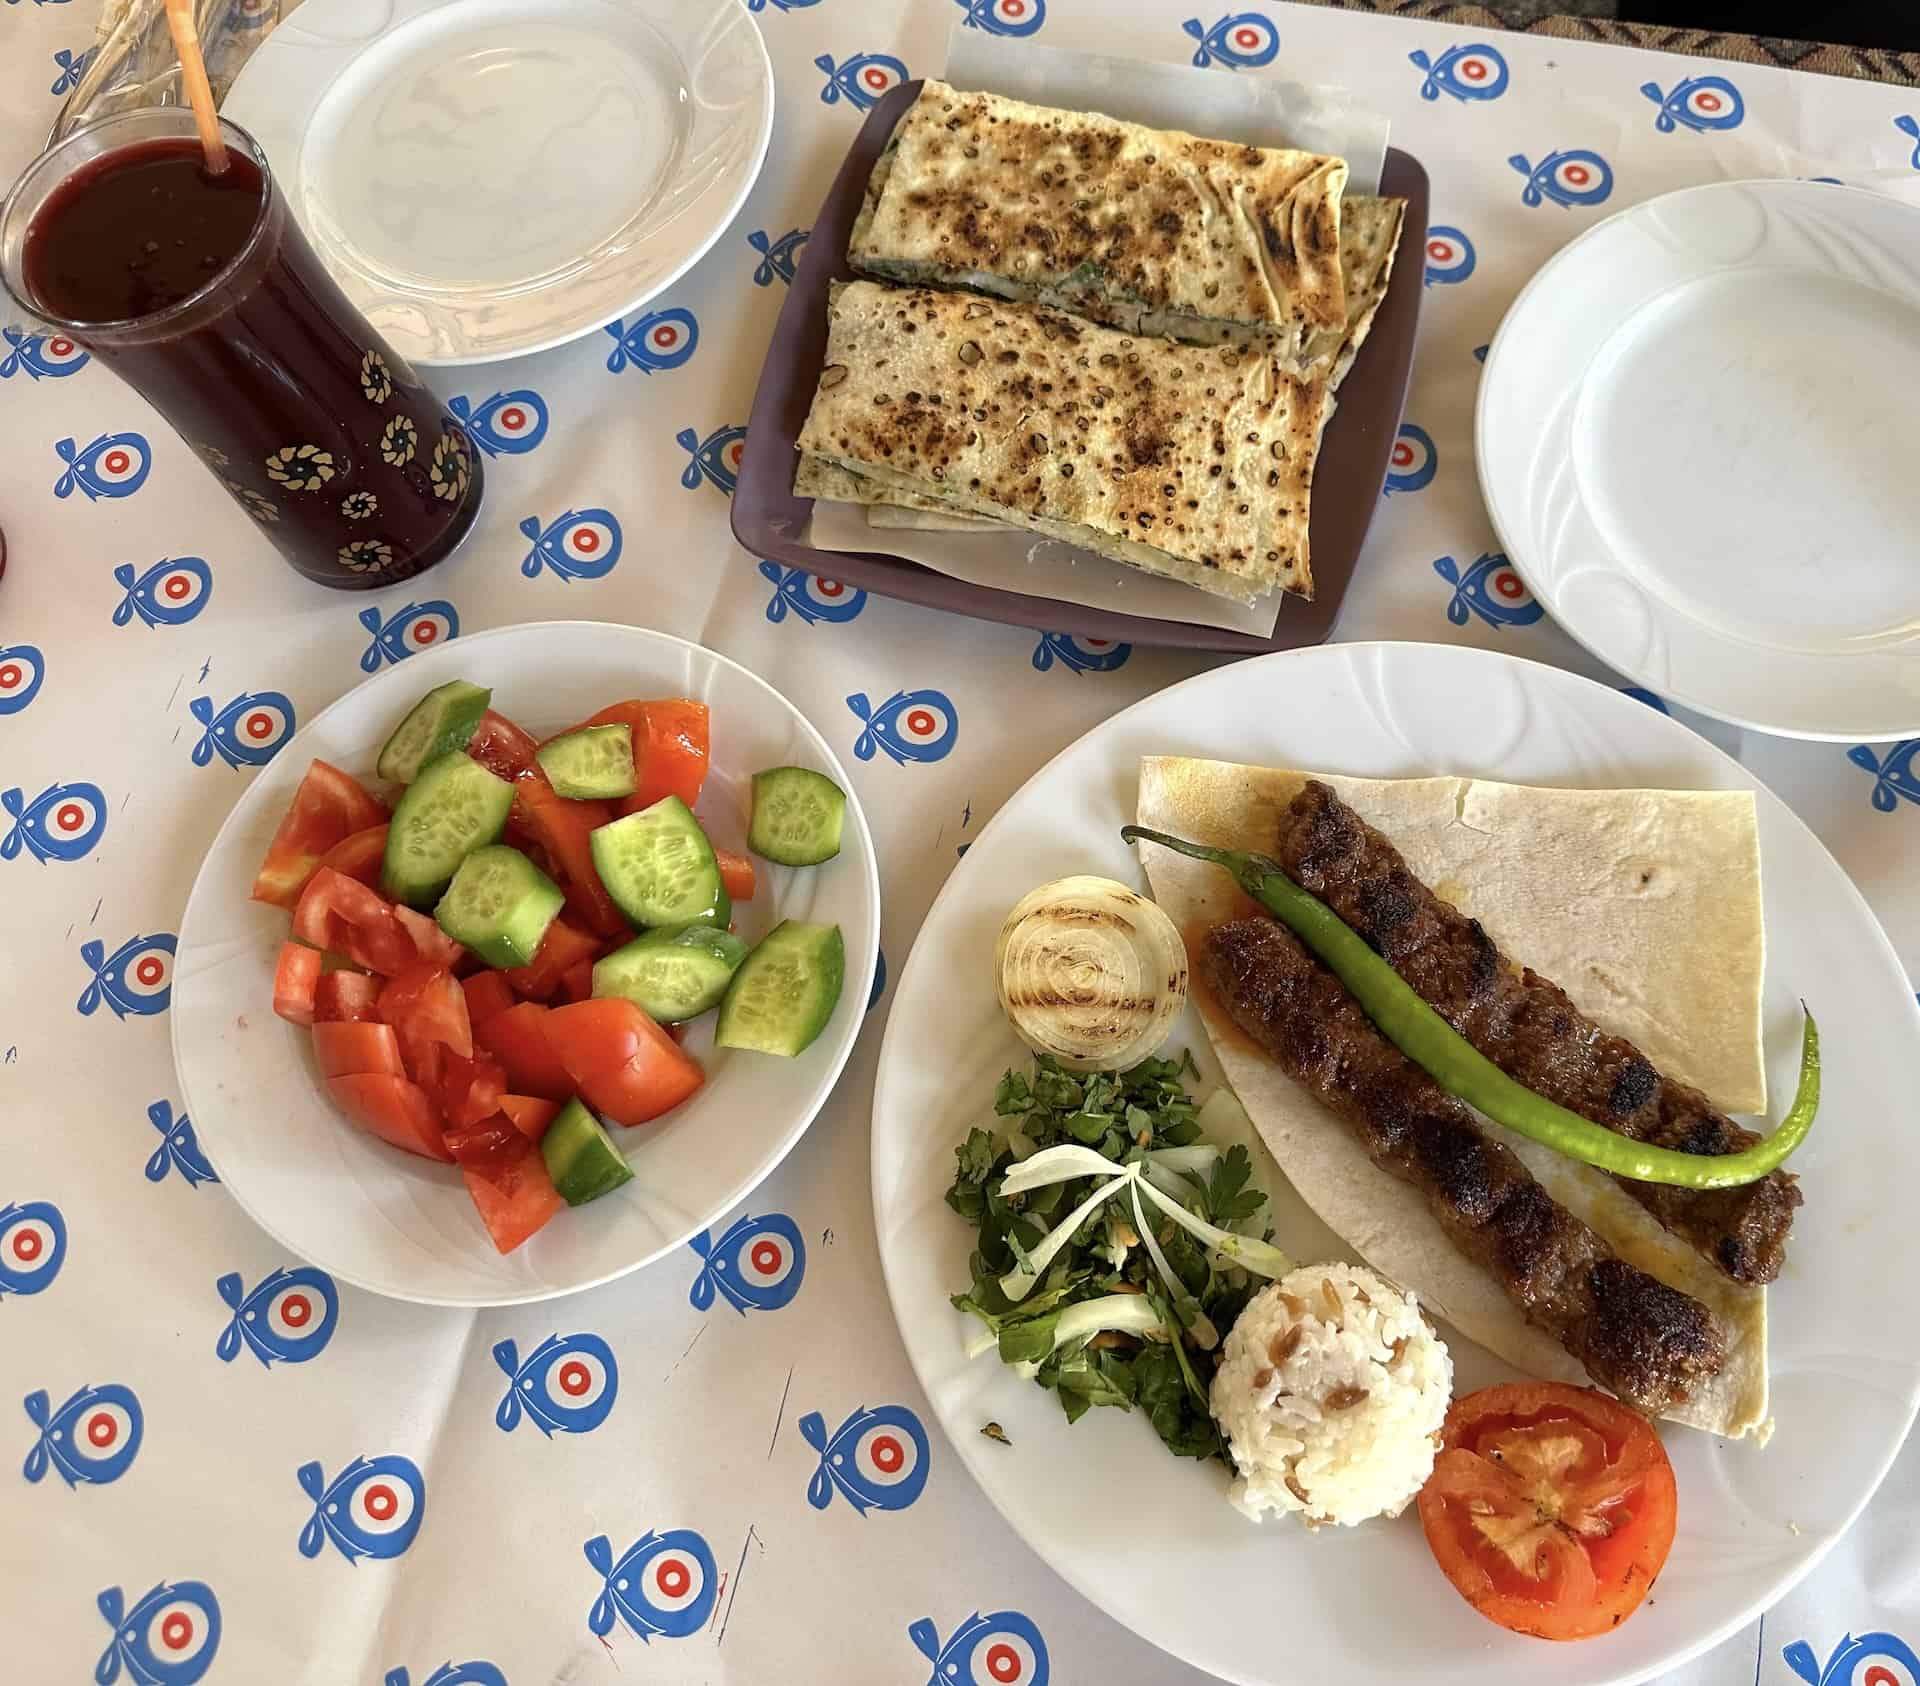 Our meal at Asker'in Yeri in Selçuk, Turkey